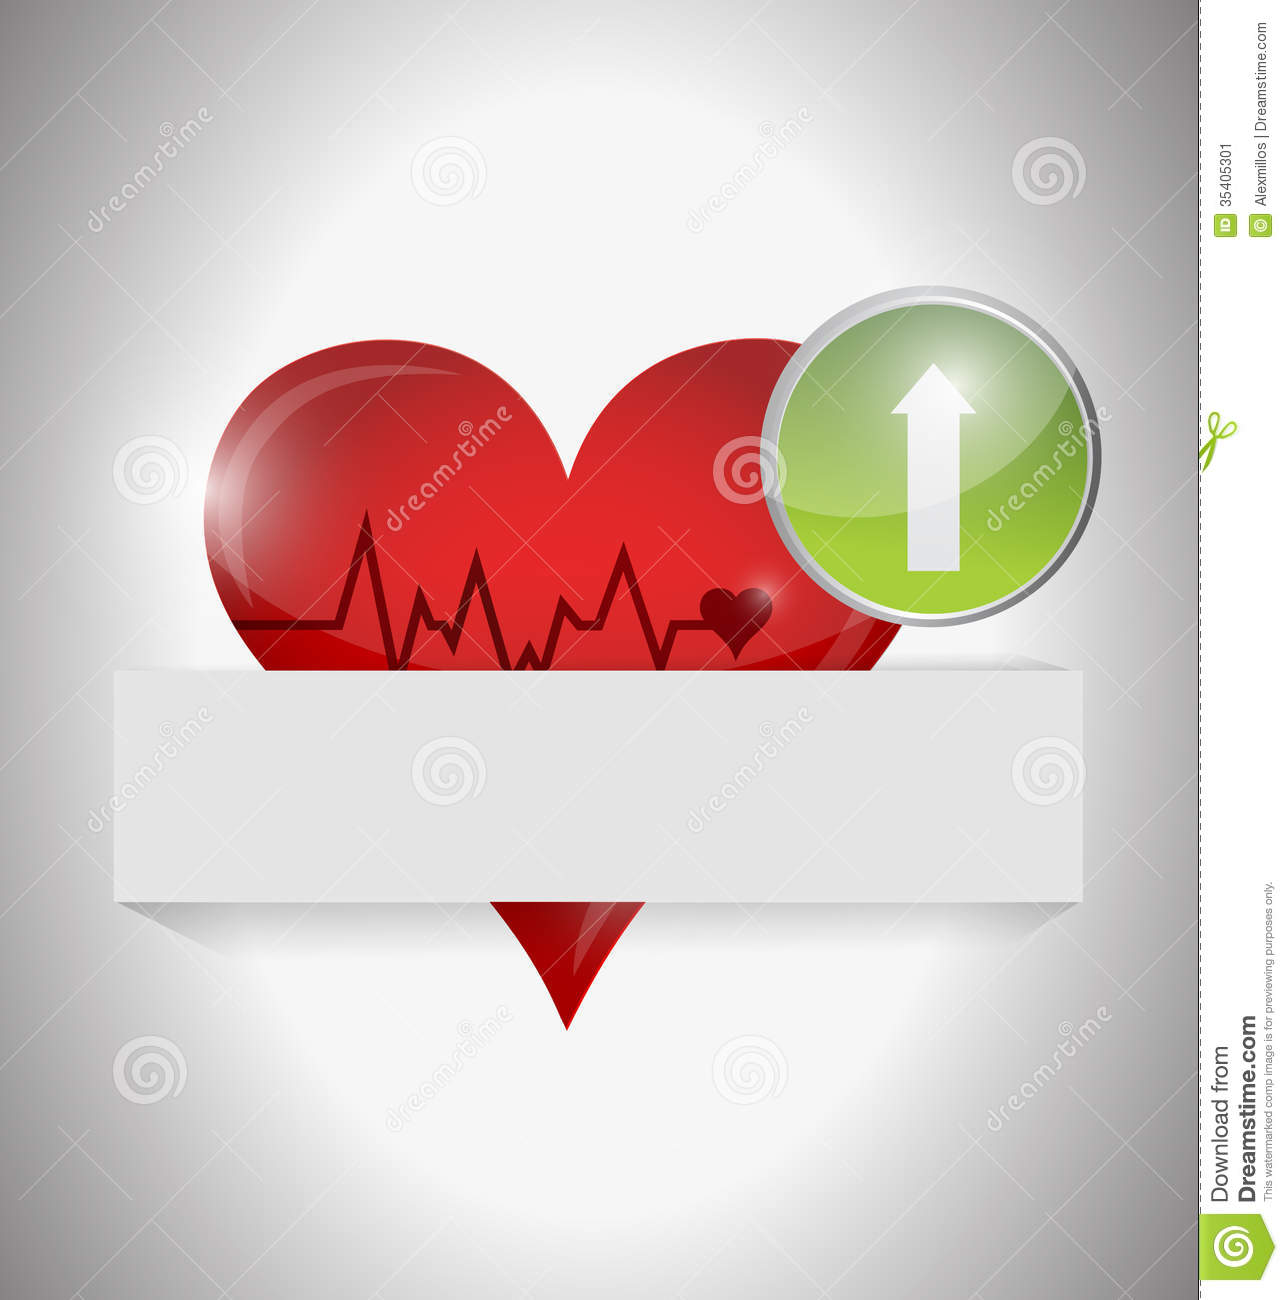 Lifeline Heart Illustration Design Stock Image   Image  35405301